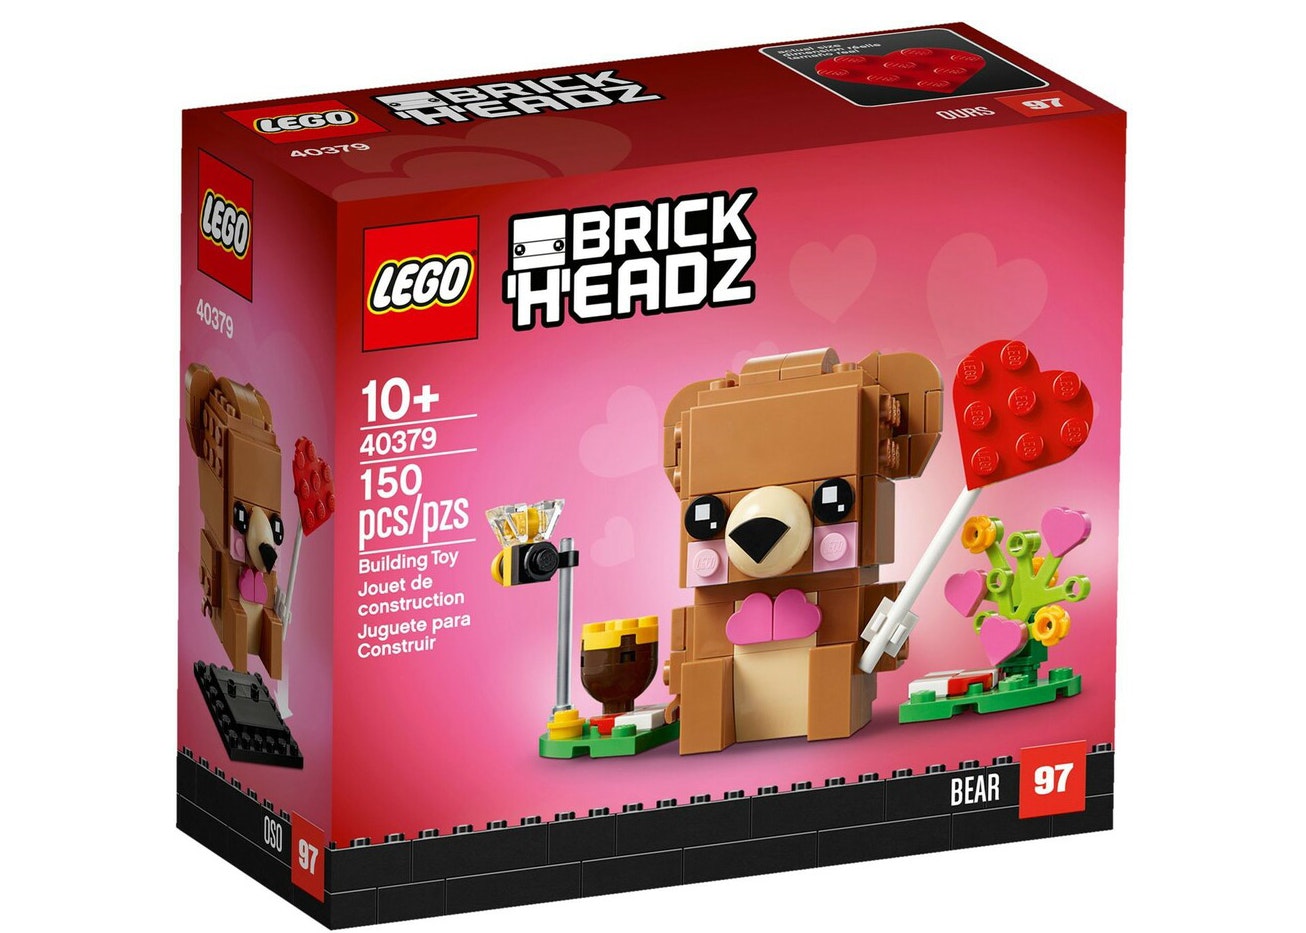 LEGO 40379 BrickHeadz Valentine's Bear New in Box